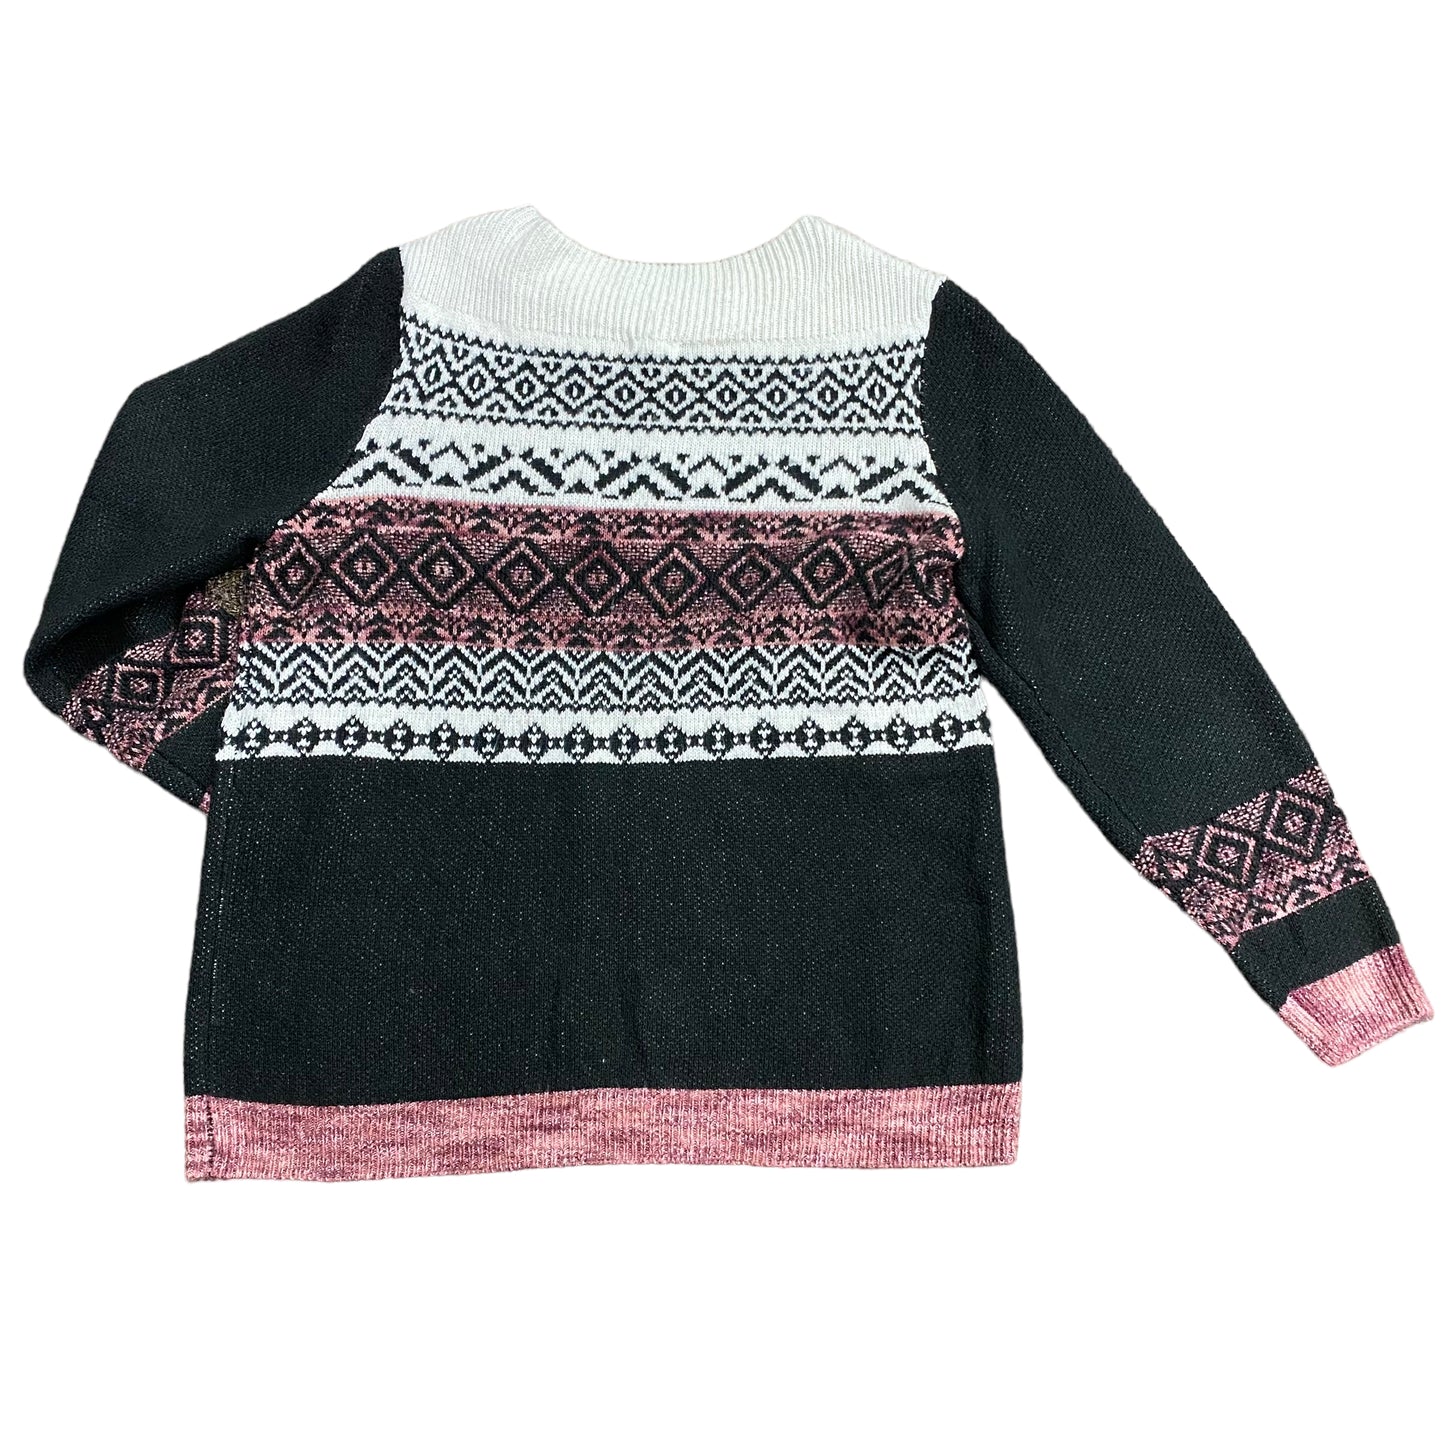 Sweater By Westport  Size: 1x